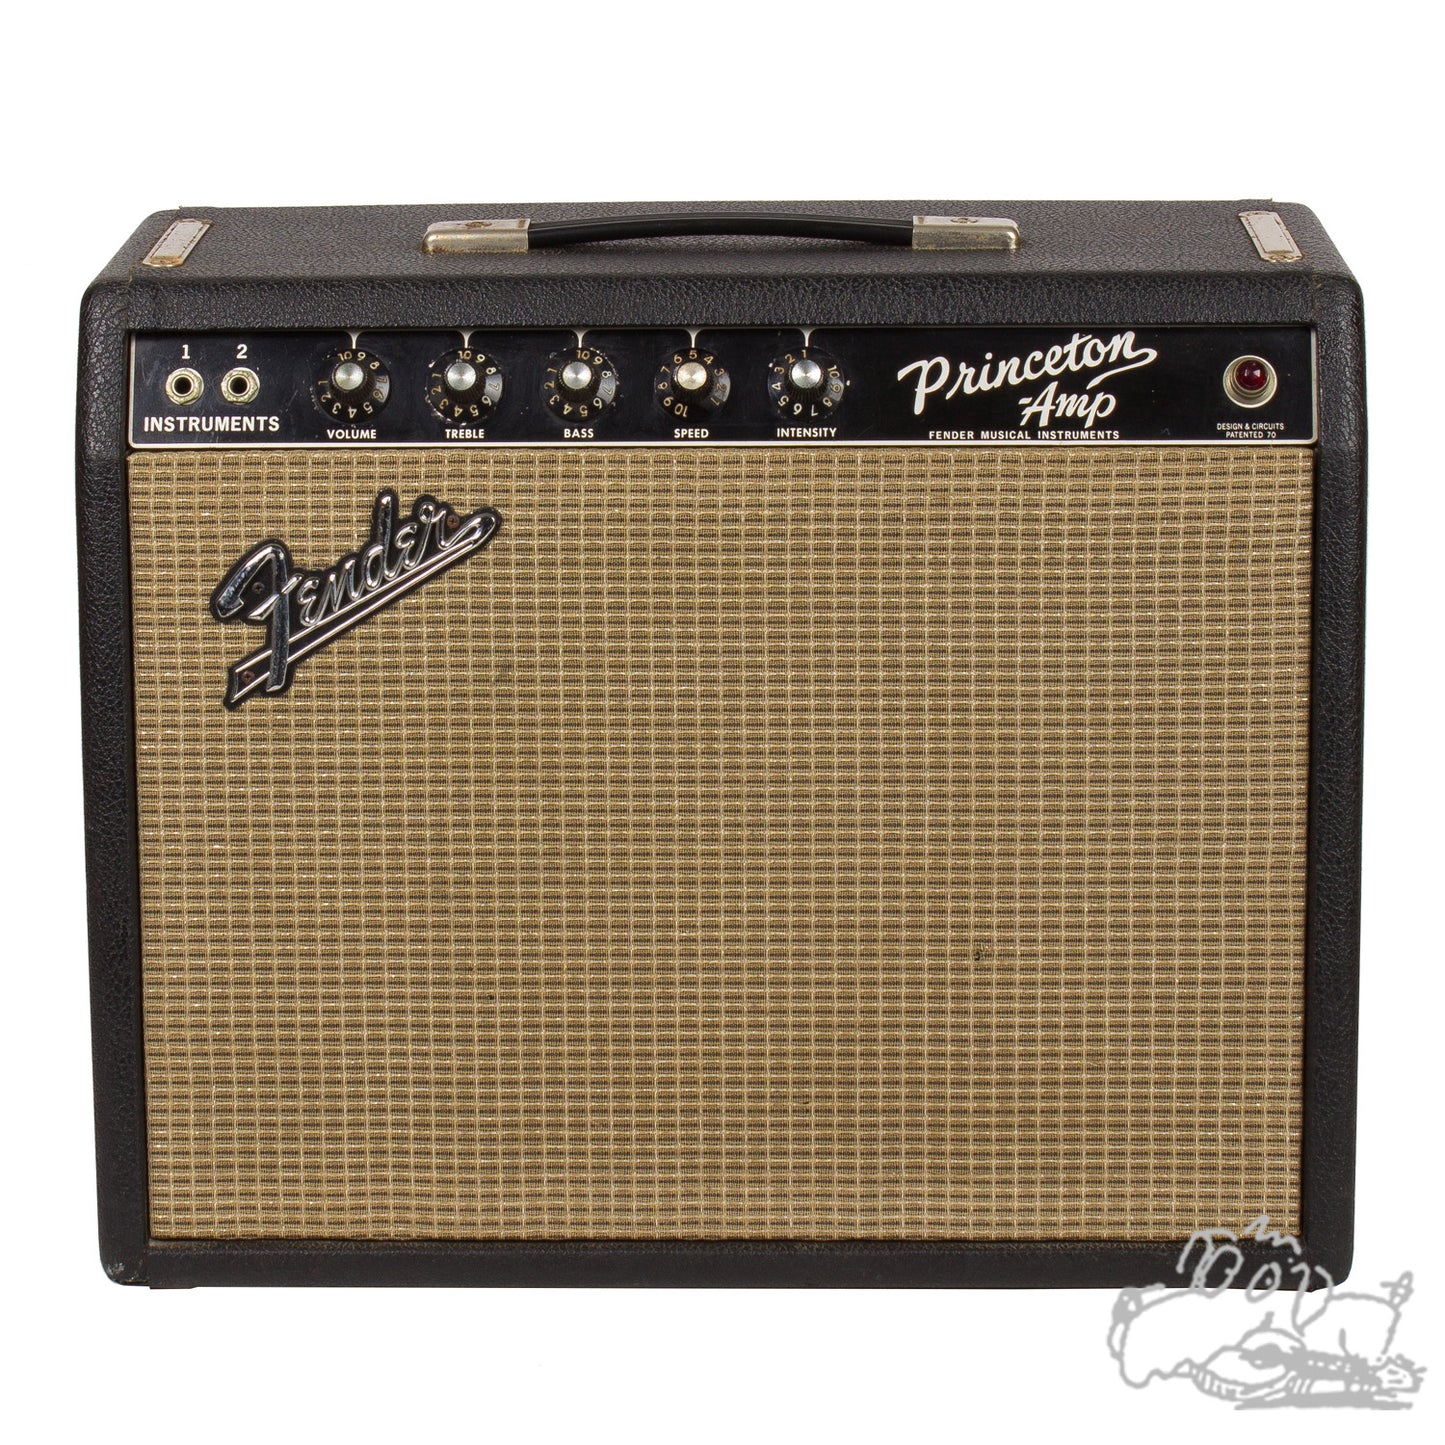 1966 Fender Princeton Amp